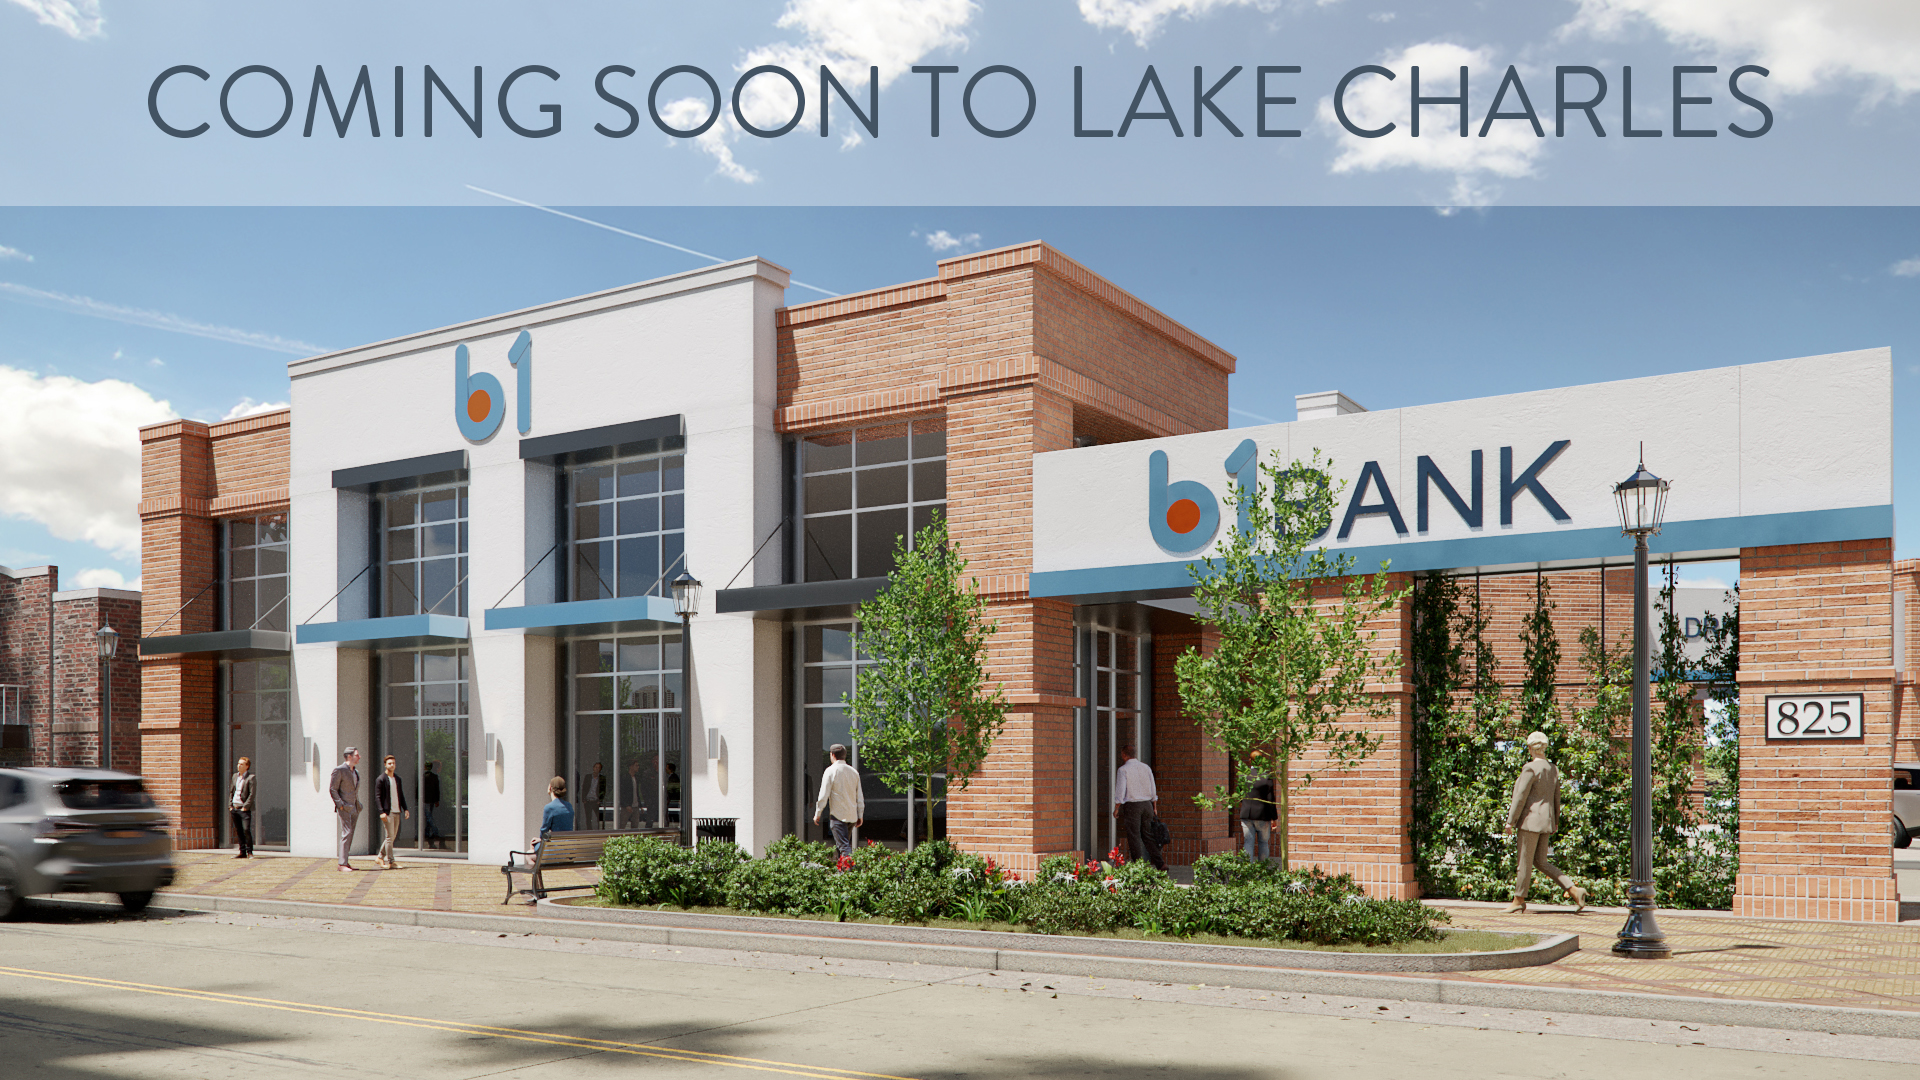 b1BANK_Coming Soon to Lake Charles